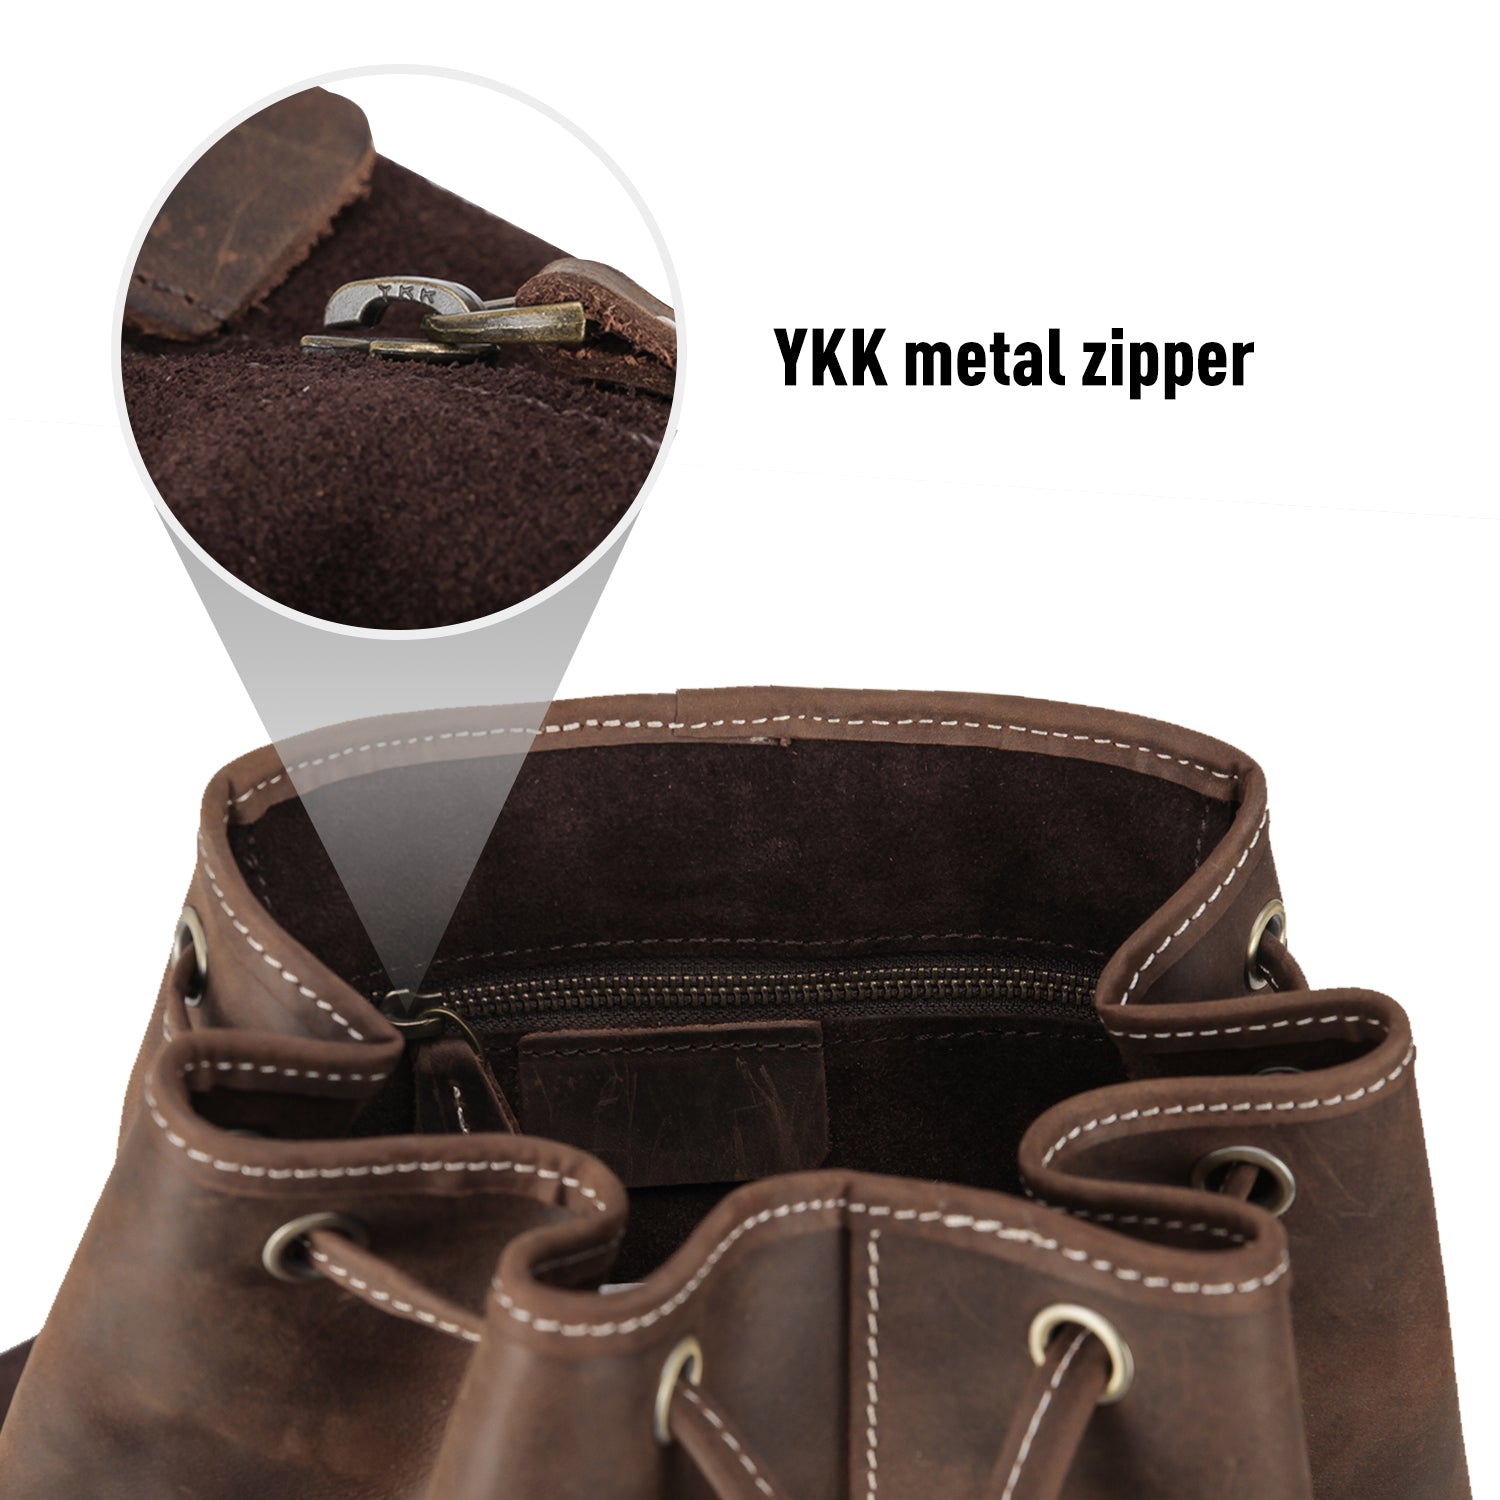 Polare Leather Backpack Vintage College Laptop Bag (Dark Brown, YKK Zipper)